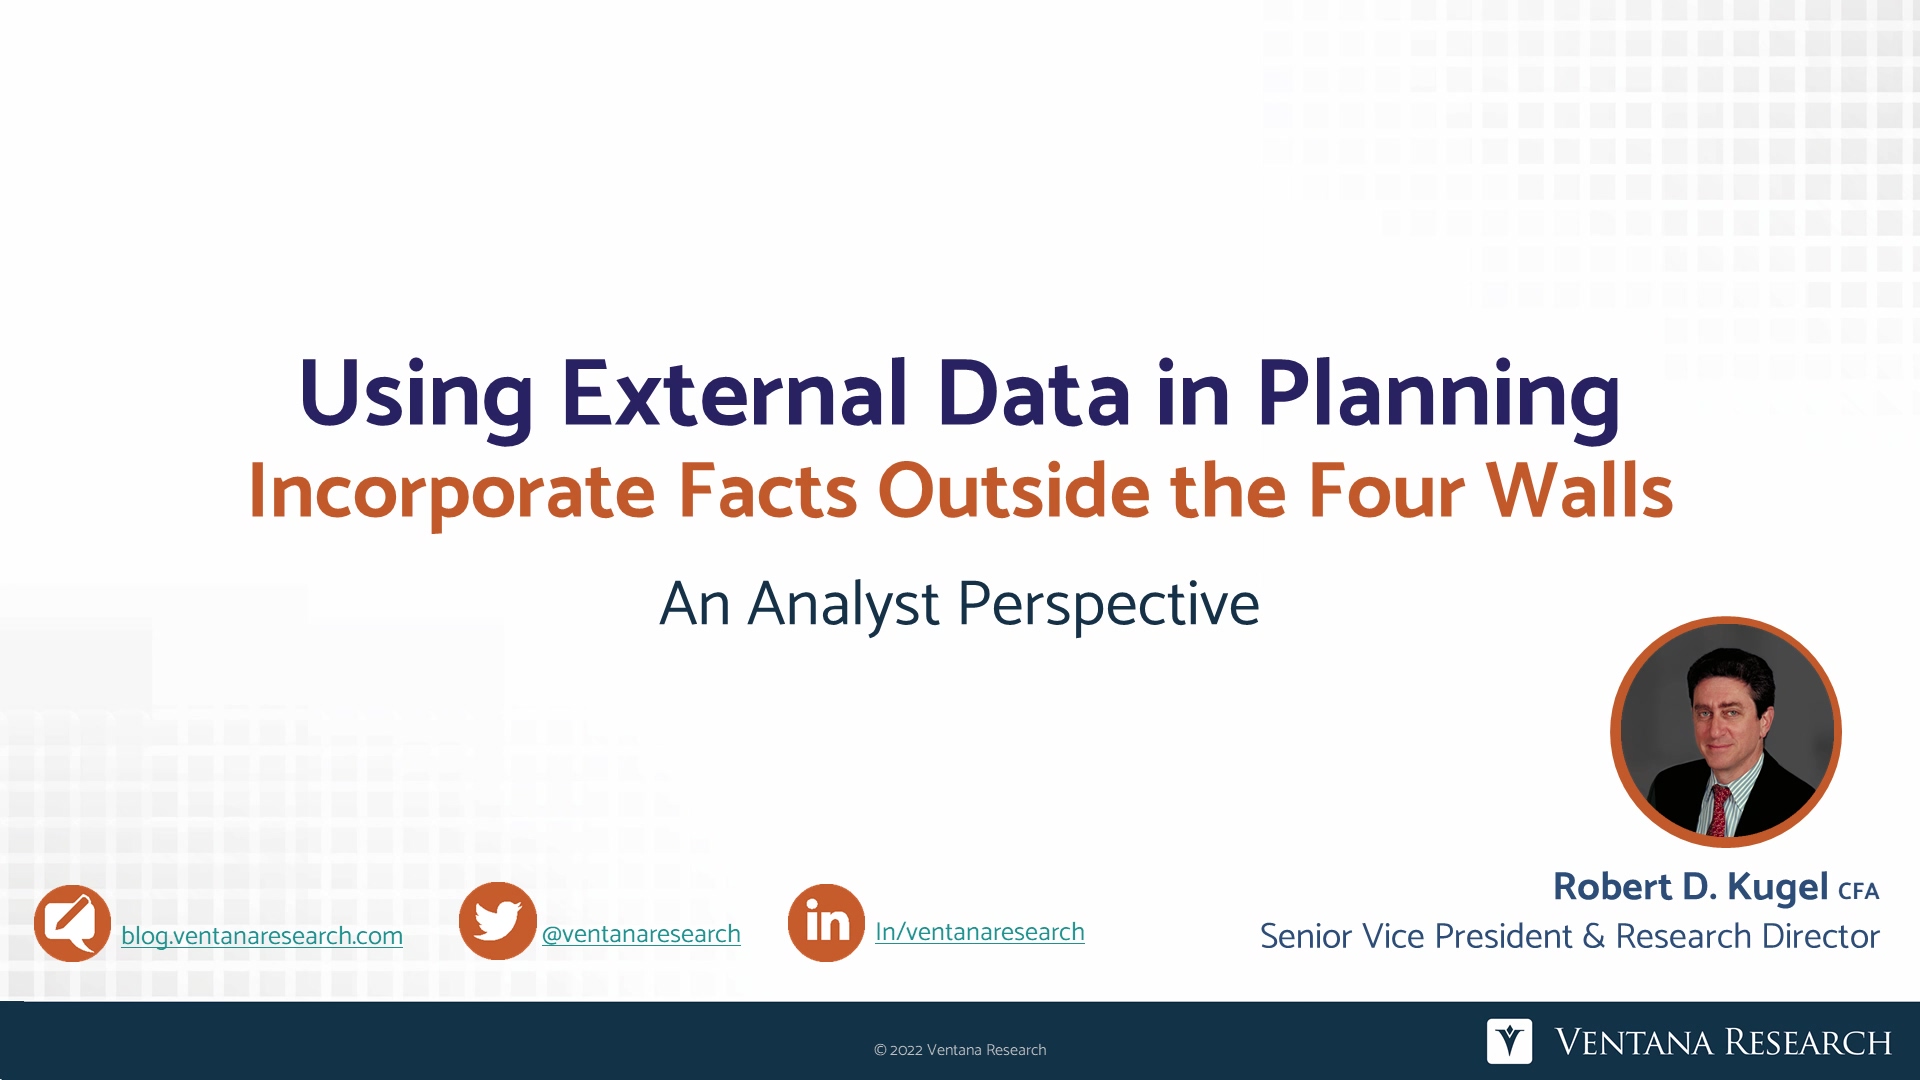 Video_AP_RK_Using_External_Data_in_Planning